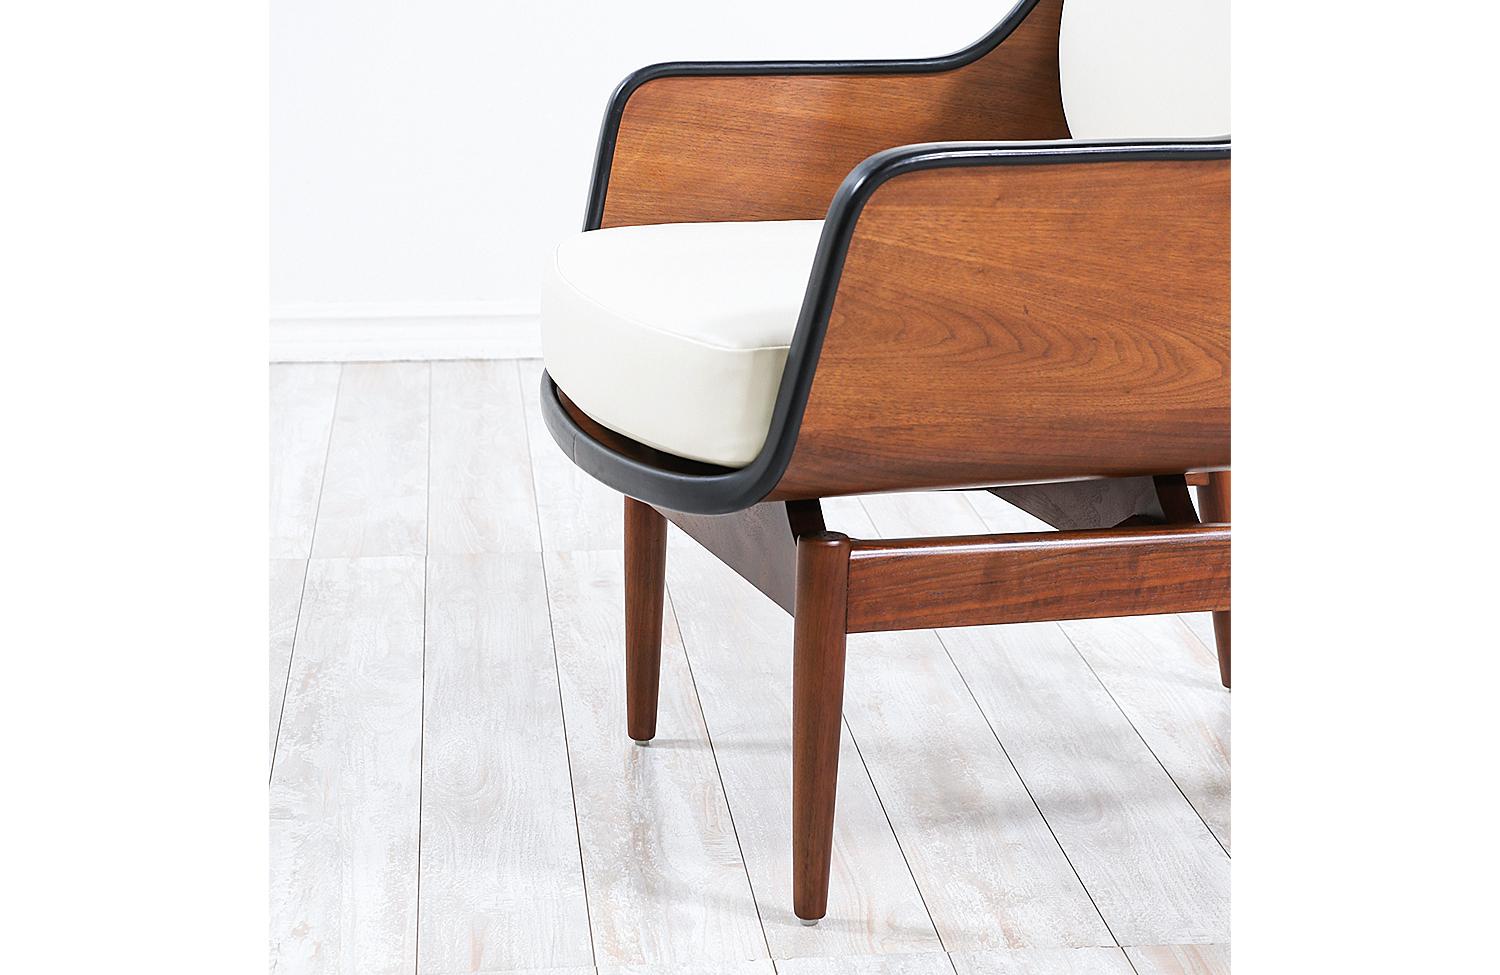 Seymour J. Wiener Bentwood Lounge Chair for Kodawood 4